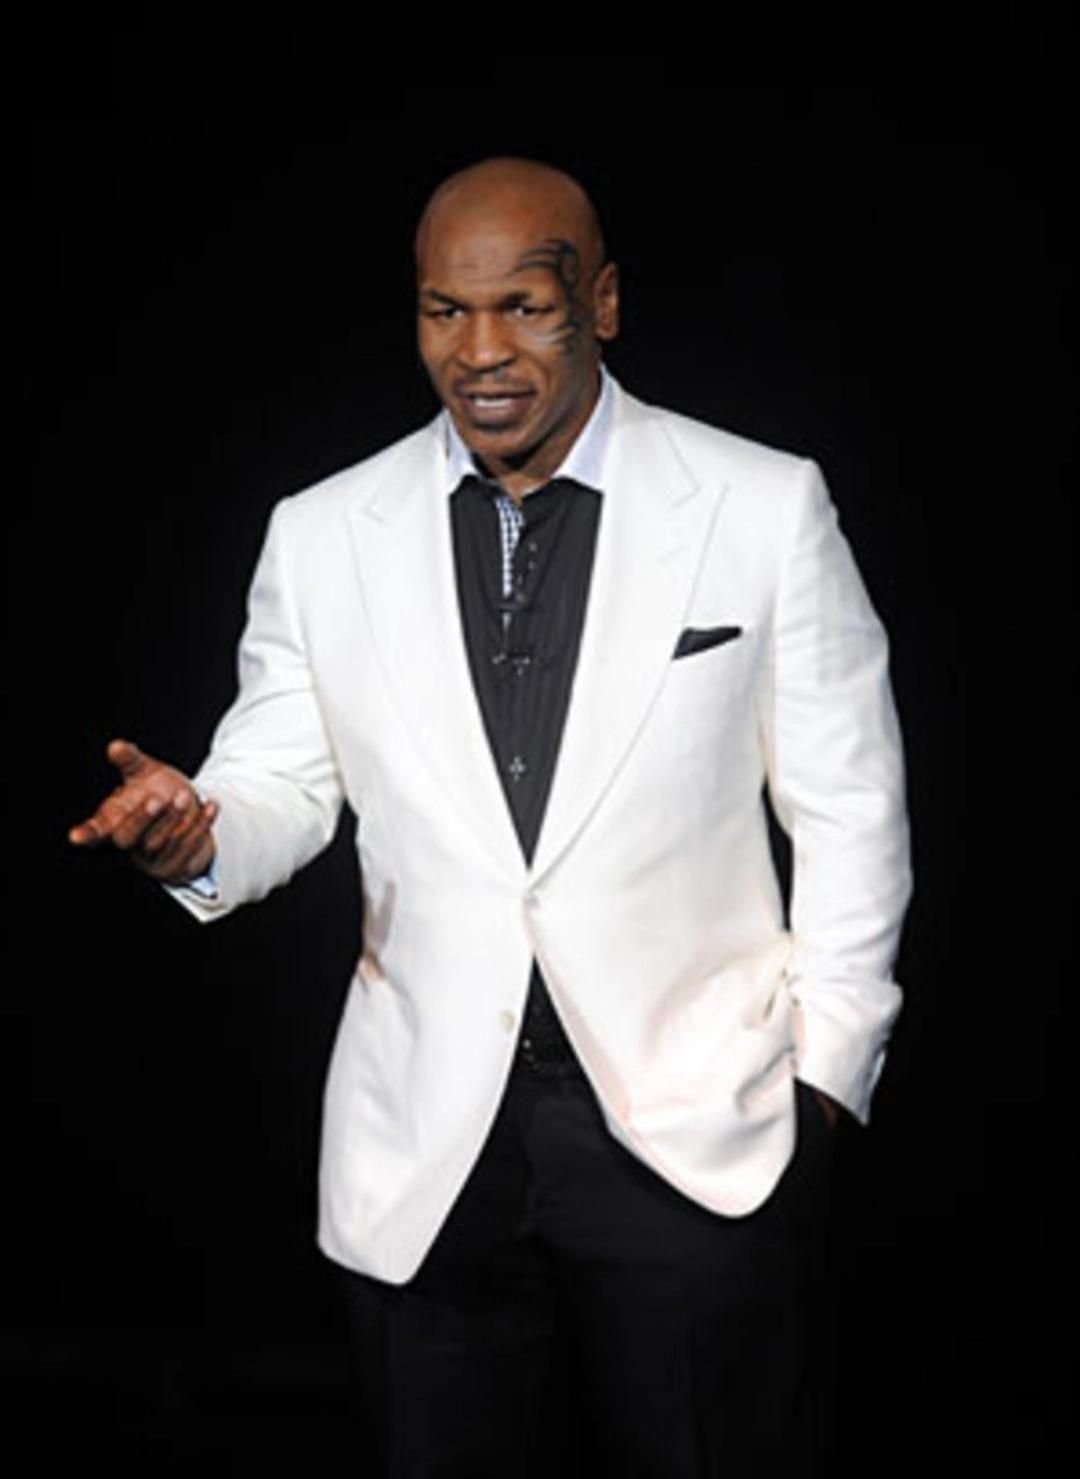 With a full arsenal of Jada Jokes, Mike Tyson already set to host the 2023 Oscars!